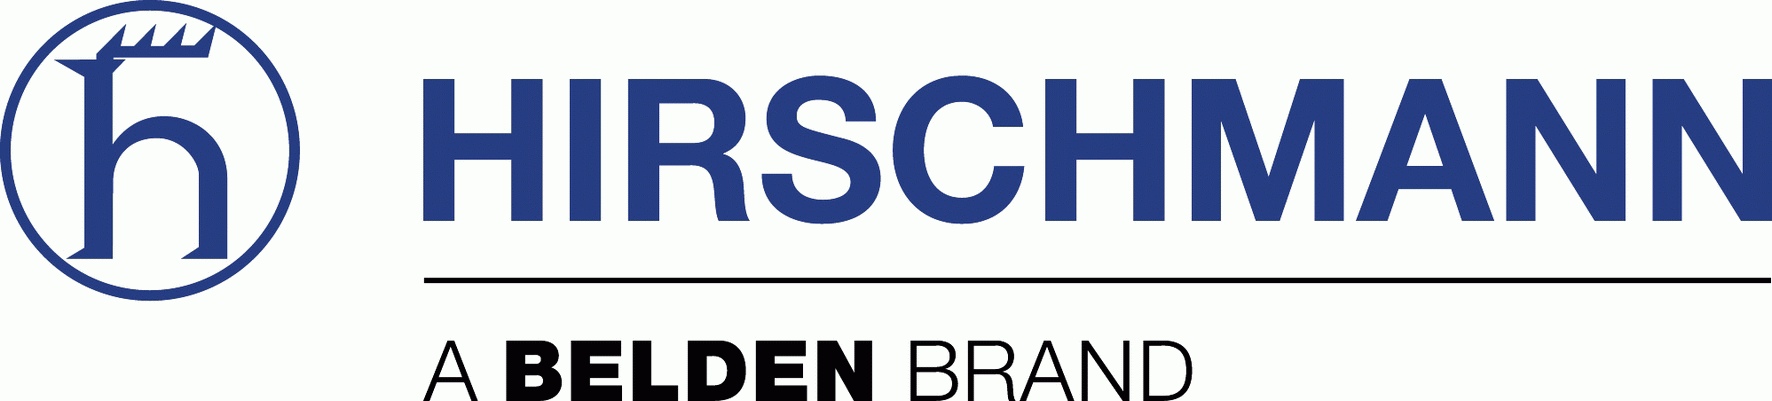 logo_hirschmann